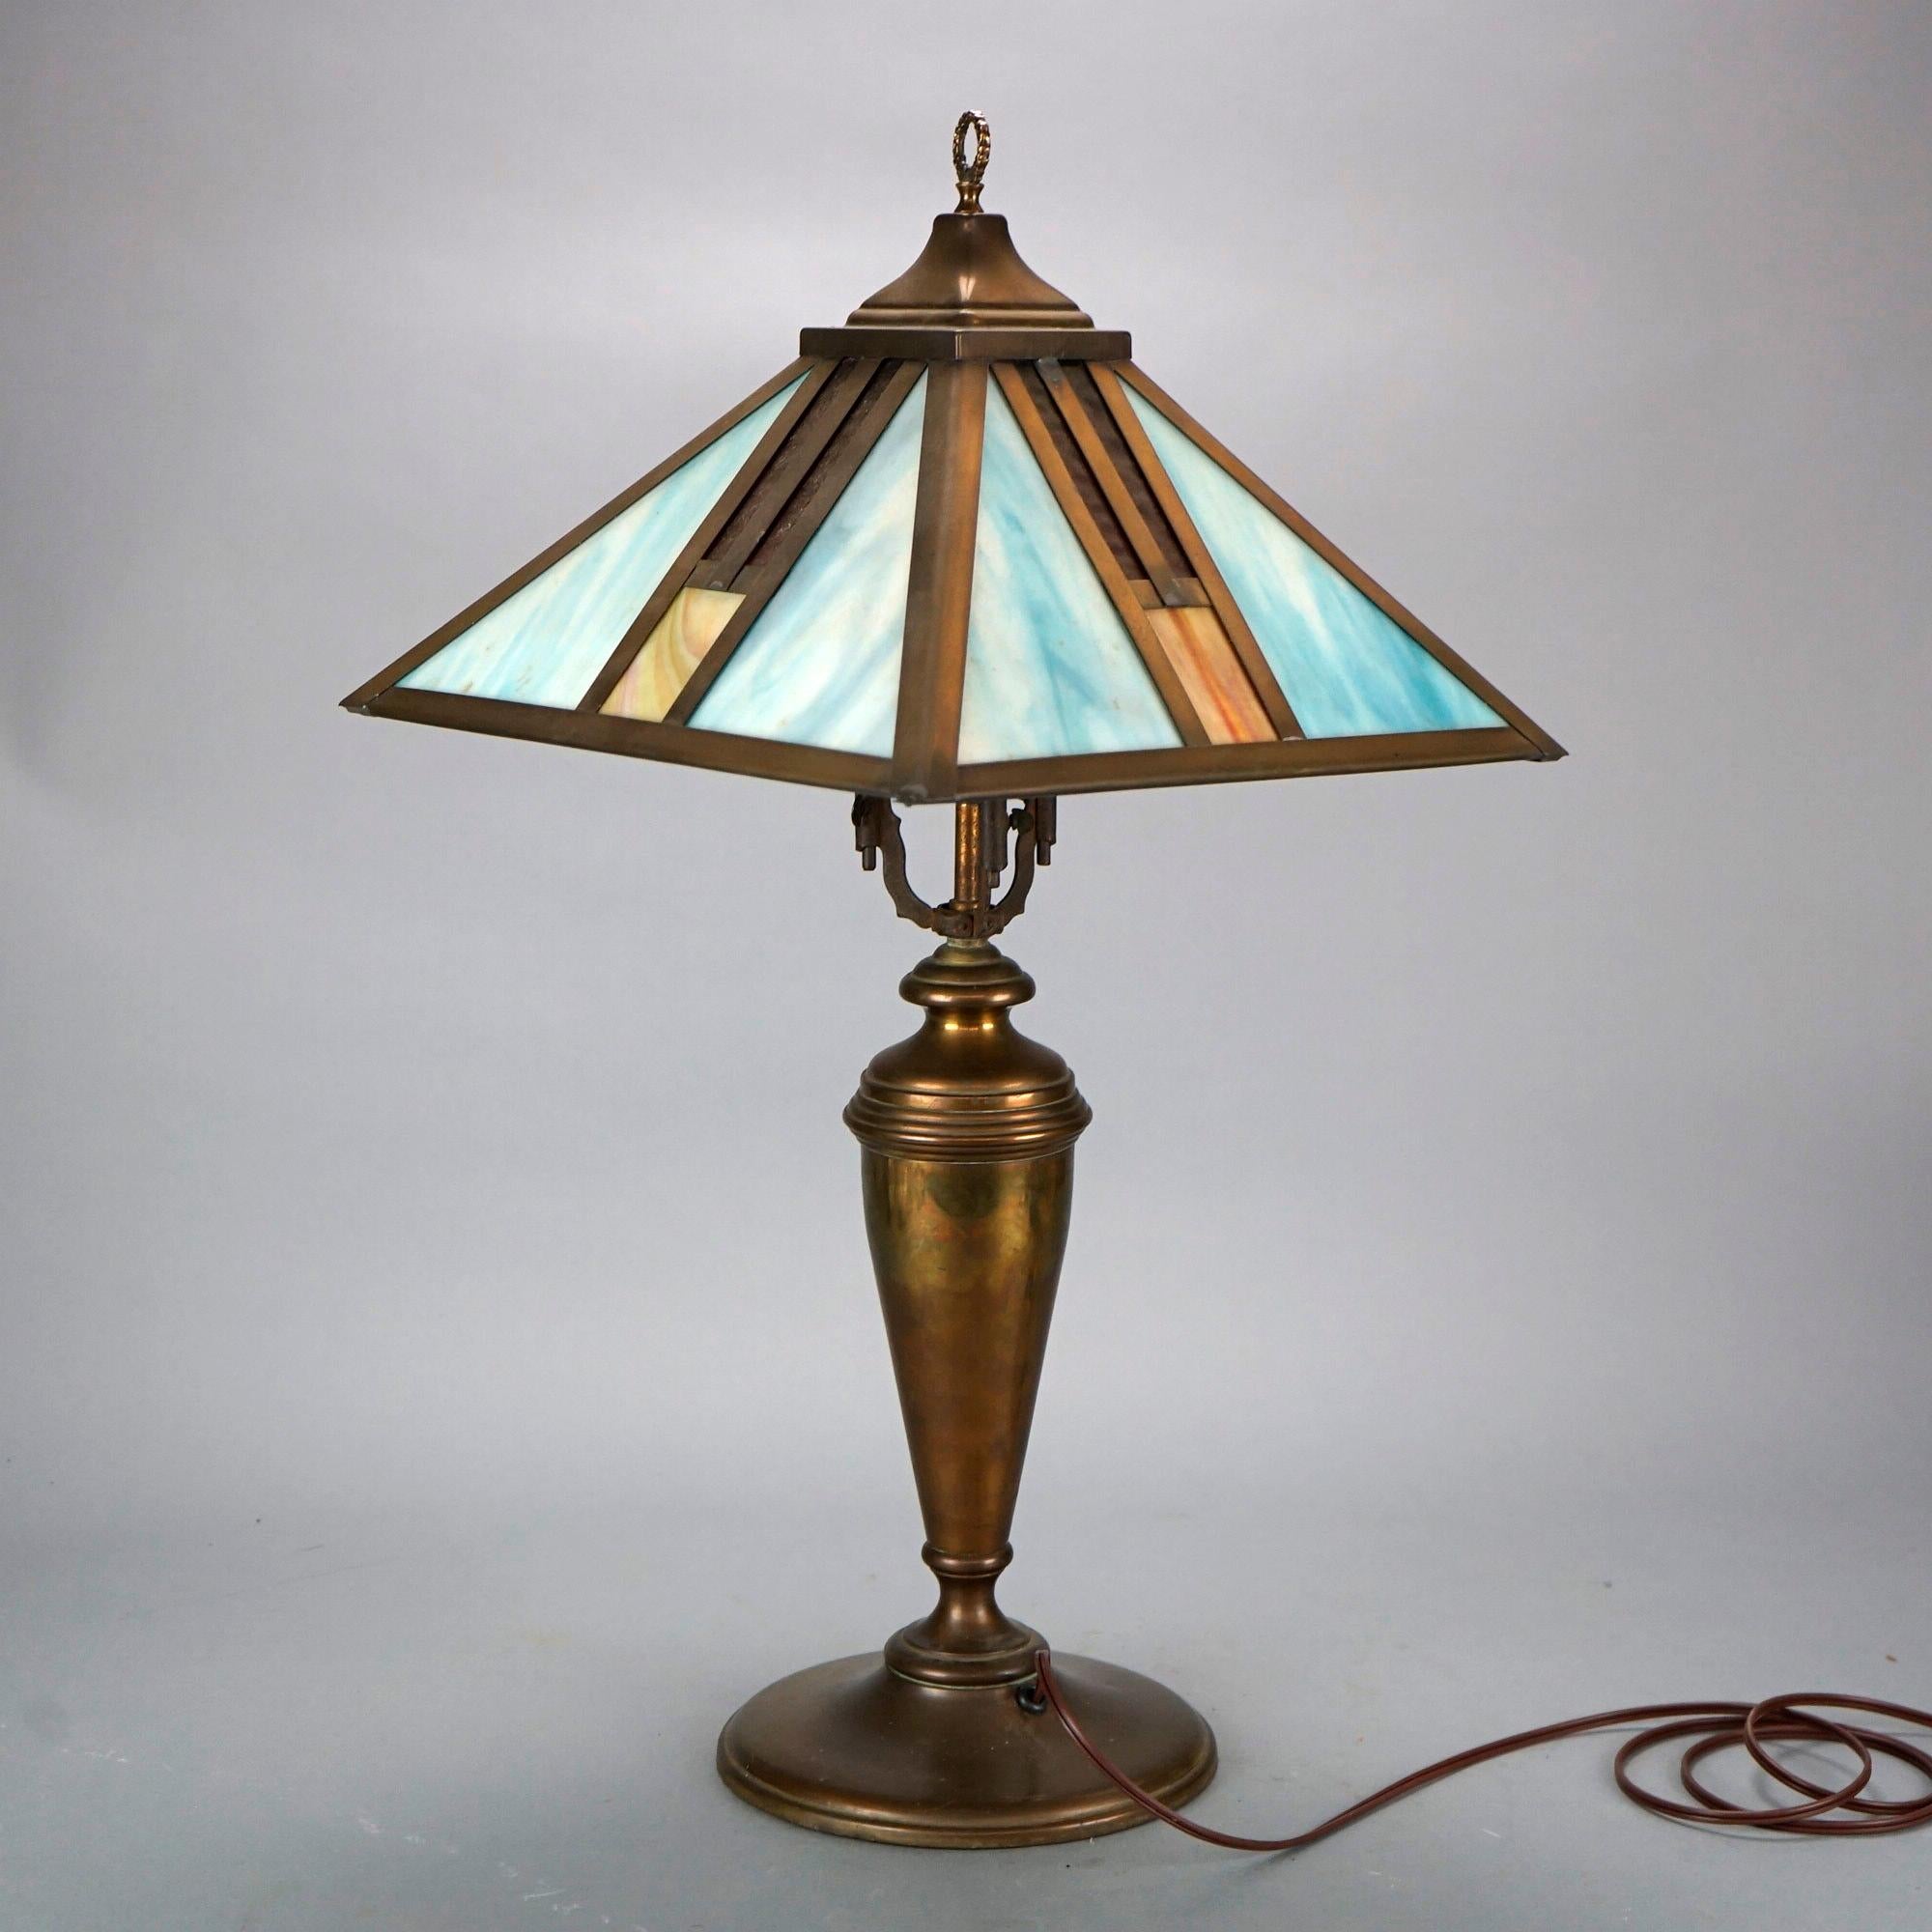 American Antique Arts & Crafts Frank Lloyd Wright School Slag Glass Table Lamp C1920